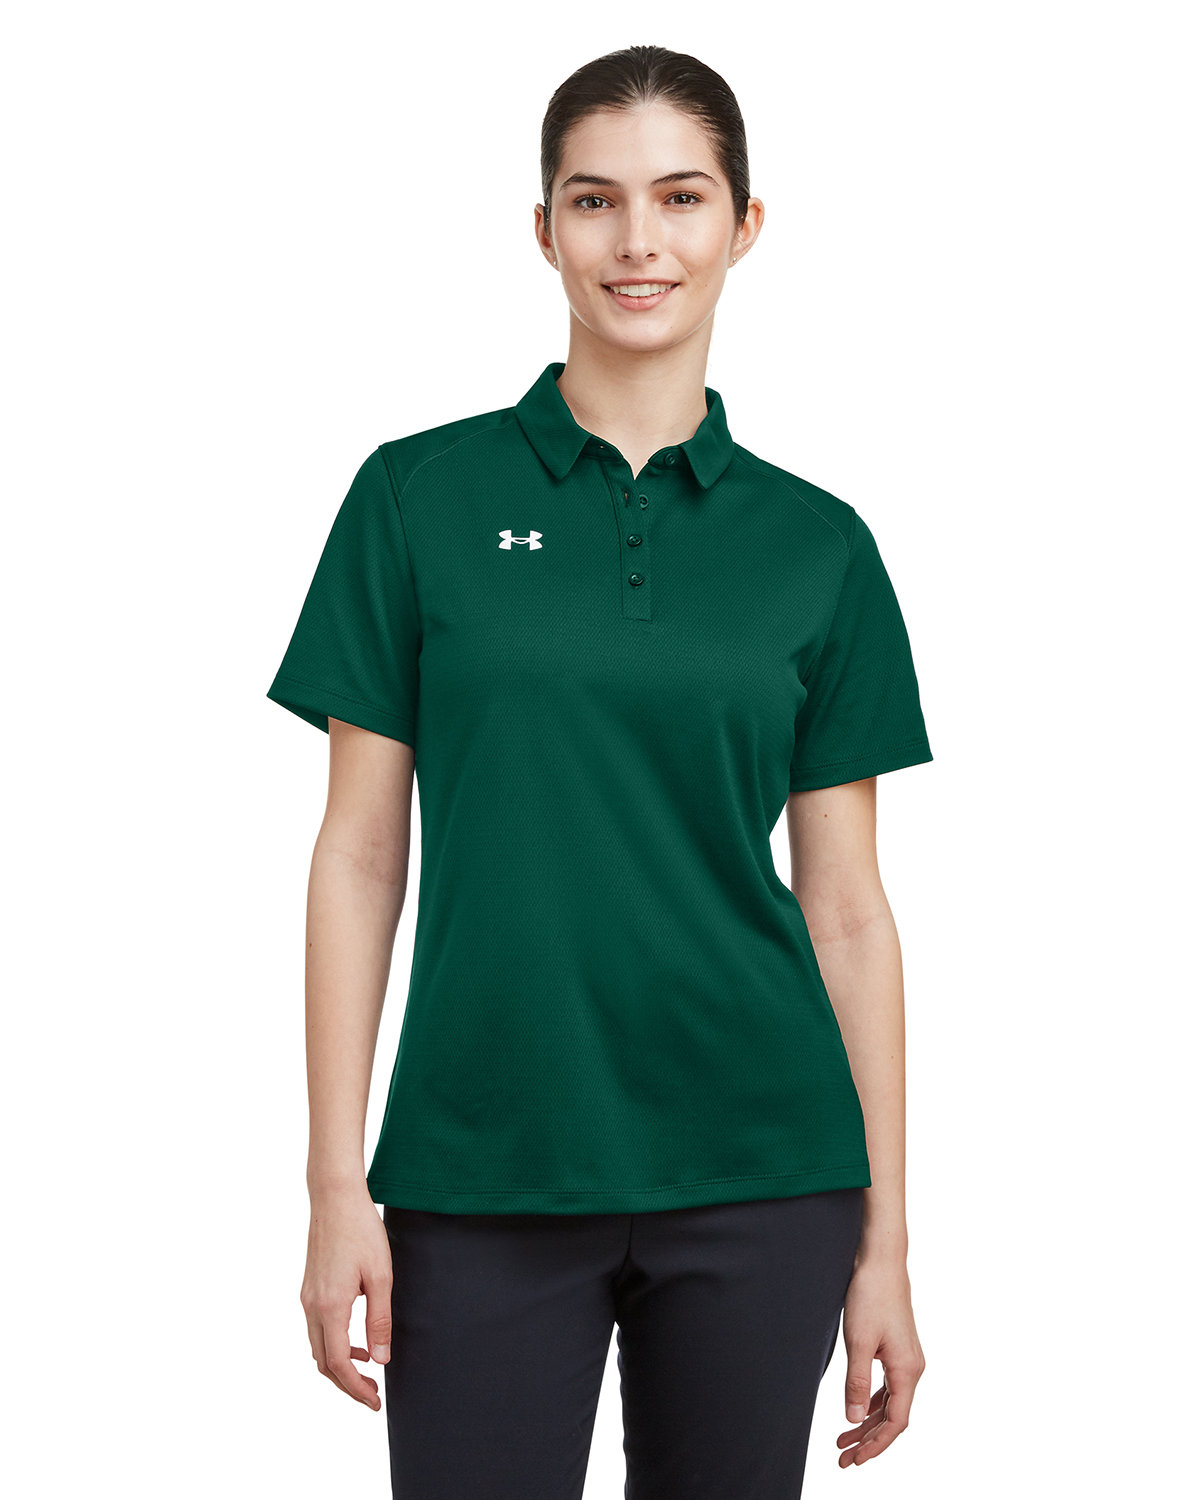 Ladies Polo. - Logo Shirts Direct